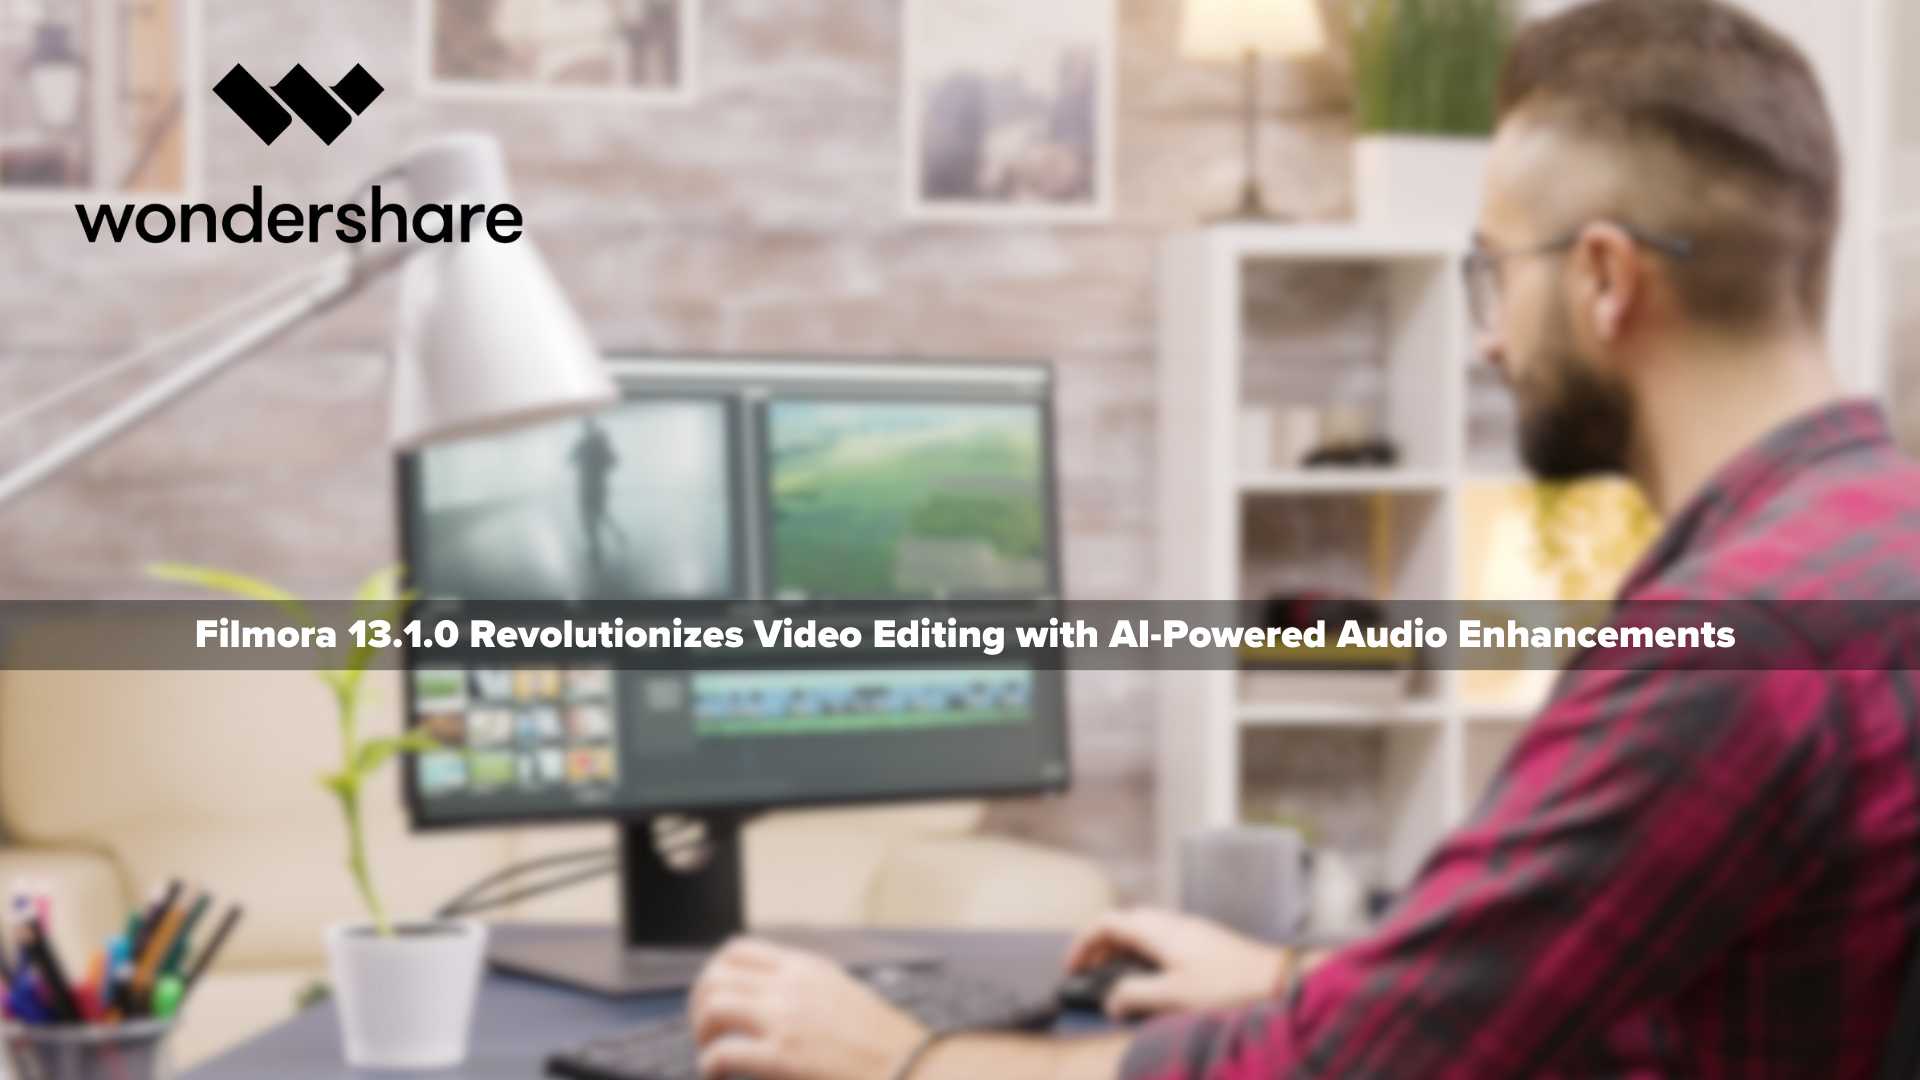 Wondershare Filmora 13.1.0 Revolutionizes Video Editing with AI-Powered Audio Enhancements